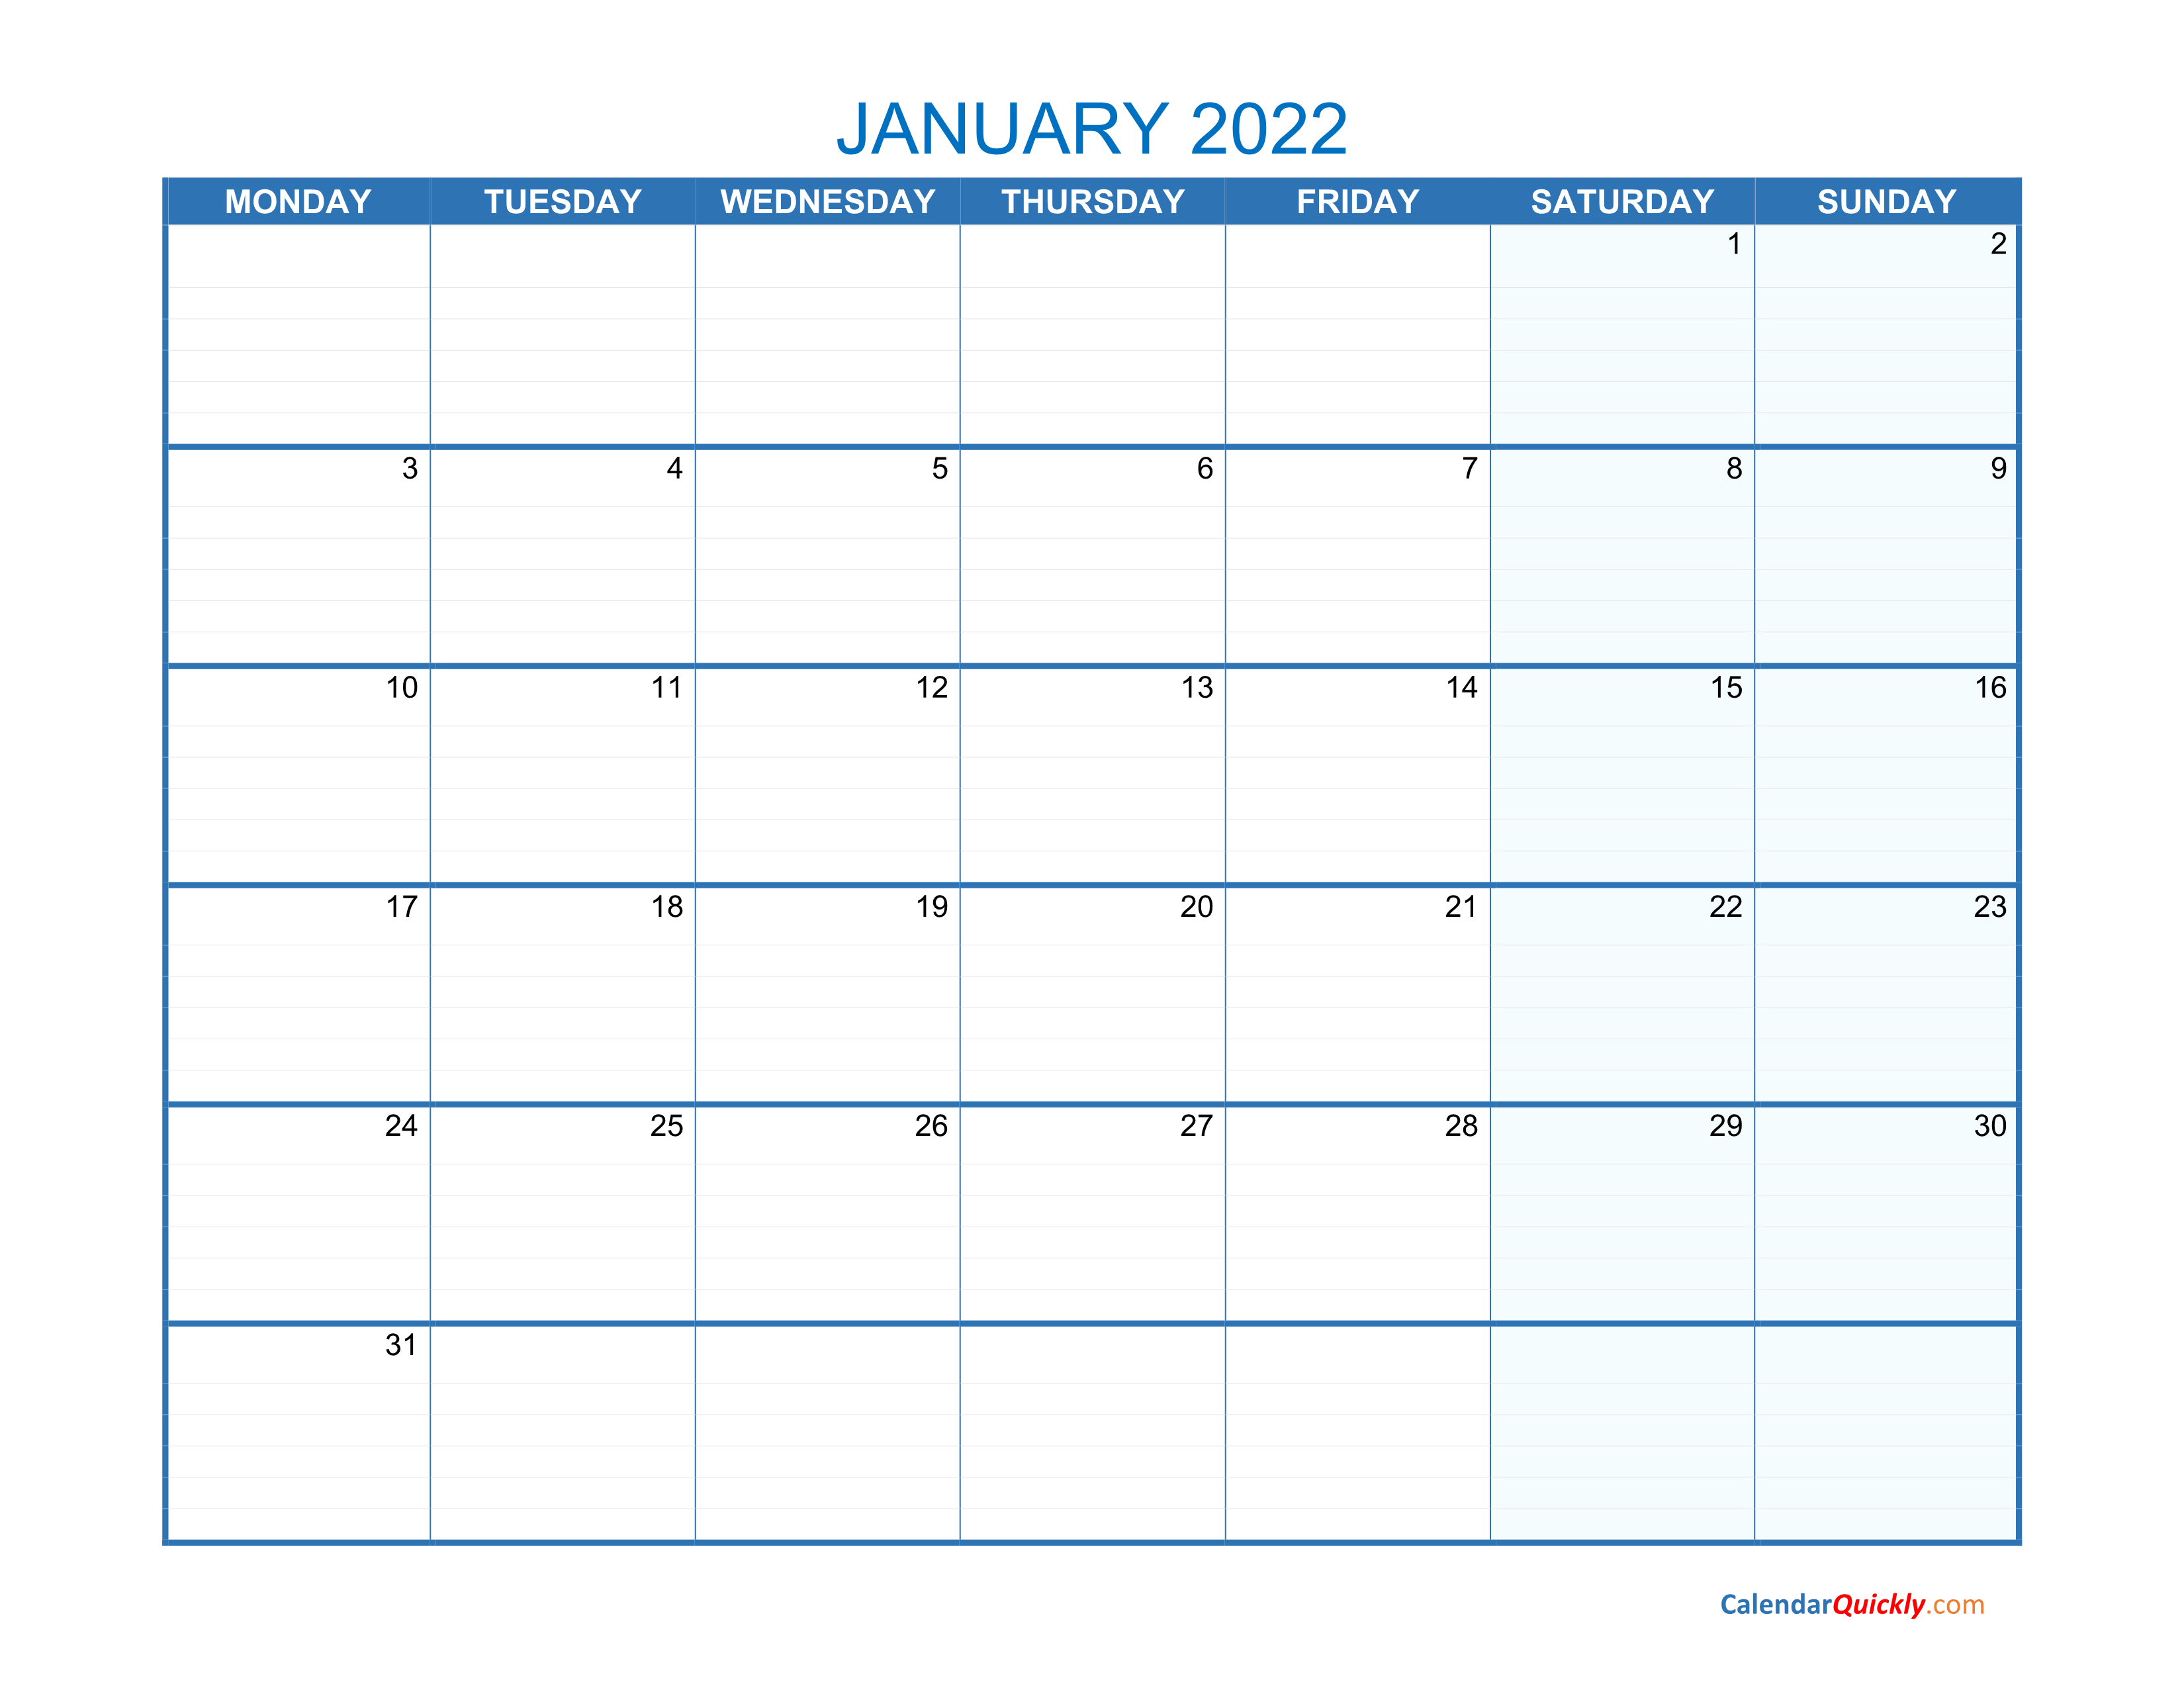 January Monday 2022 Blank Calendar Calendar Quickly